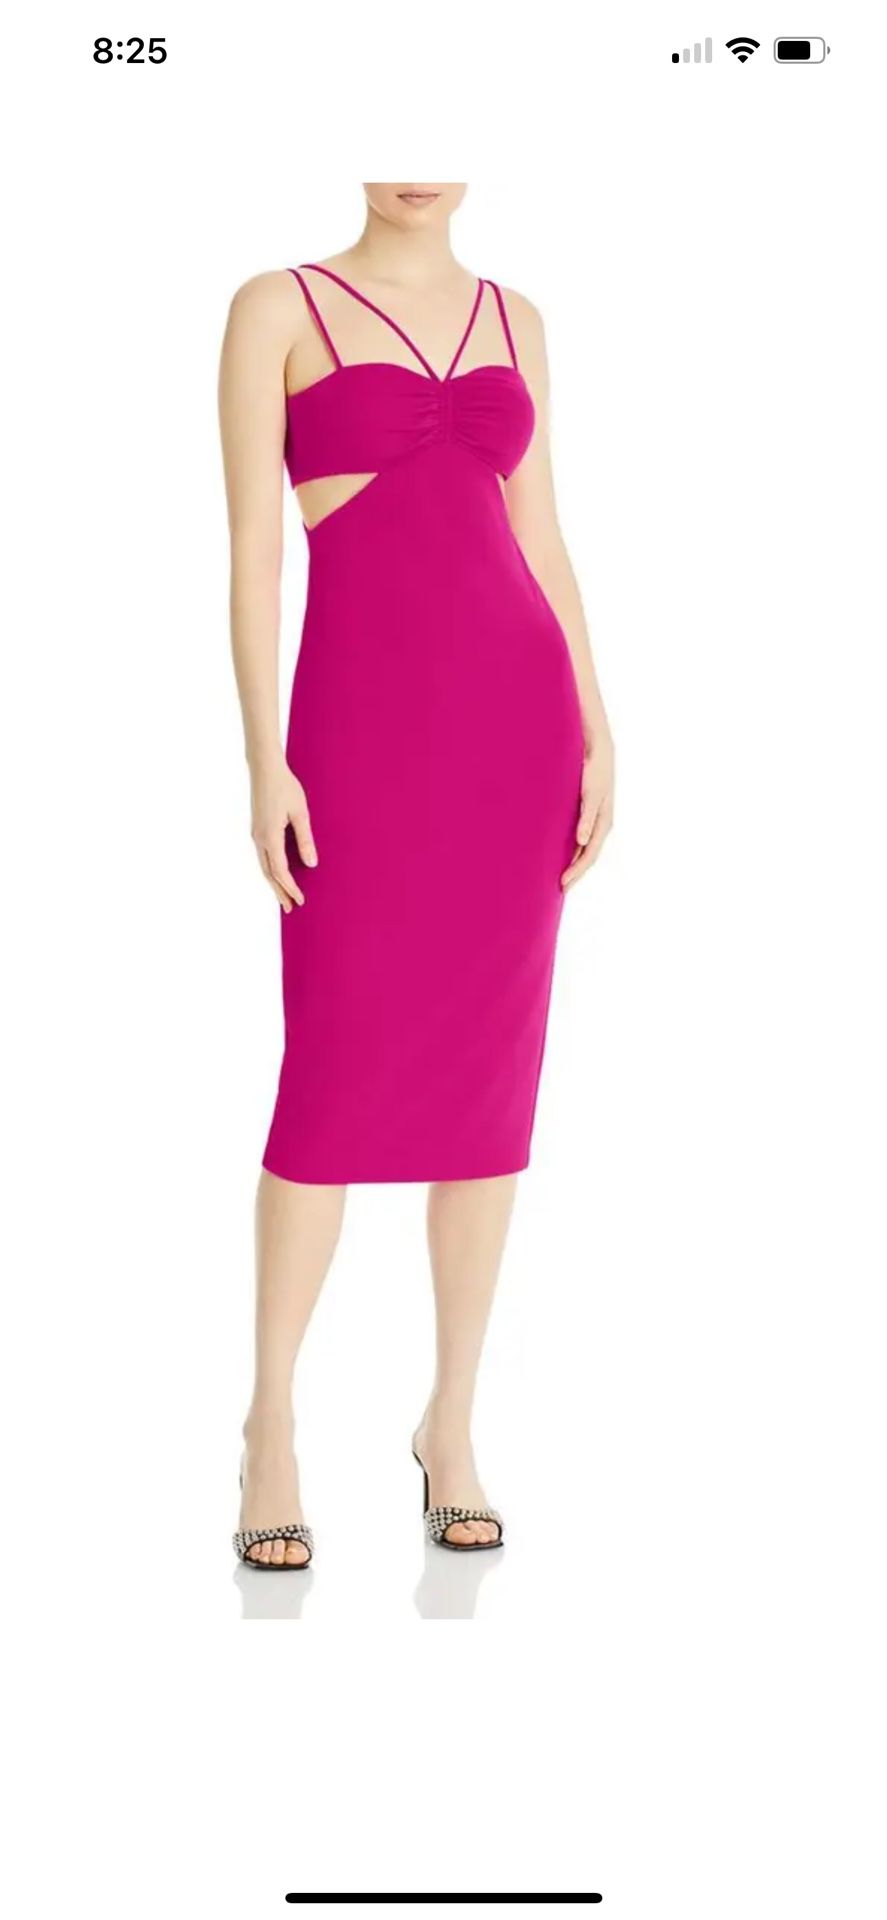 New Aqua Pink Cutout Party Dress Size 6 M